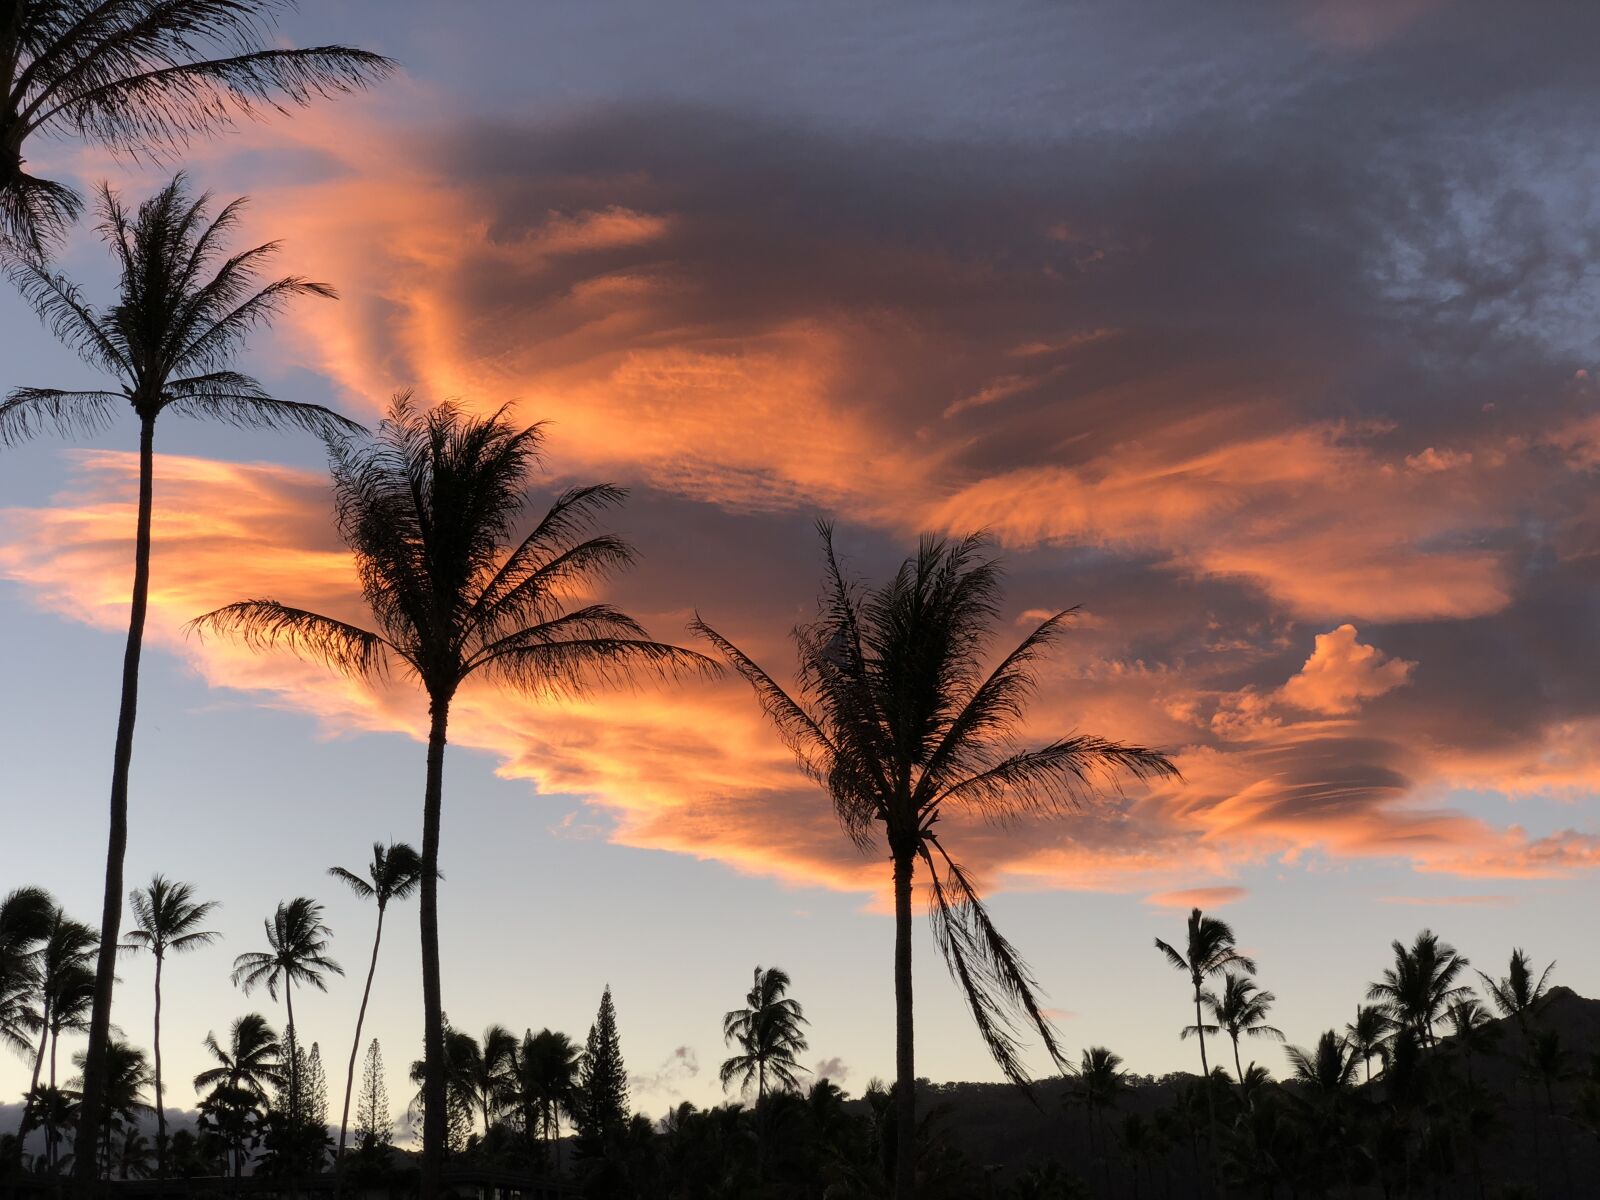 Apple iPhone X + iPhone X back dual camera 6mm f/2.4 sample photo. Sky, hawaii, palm trees photography